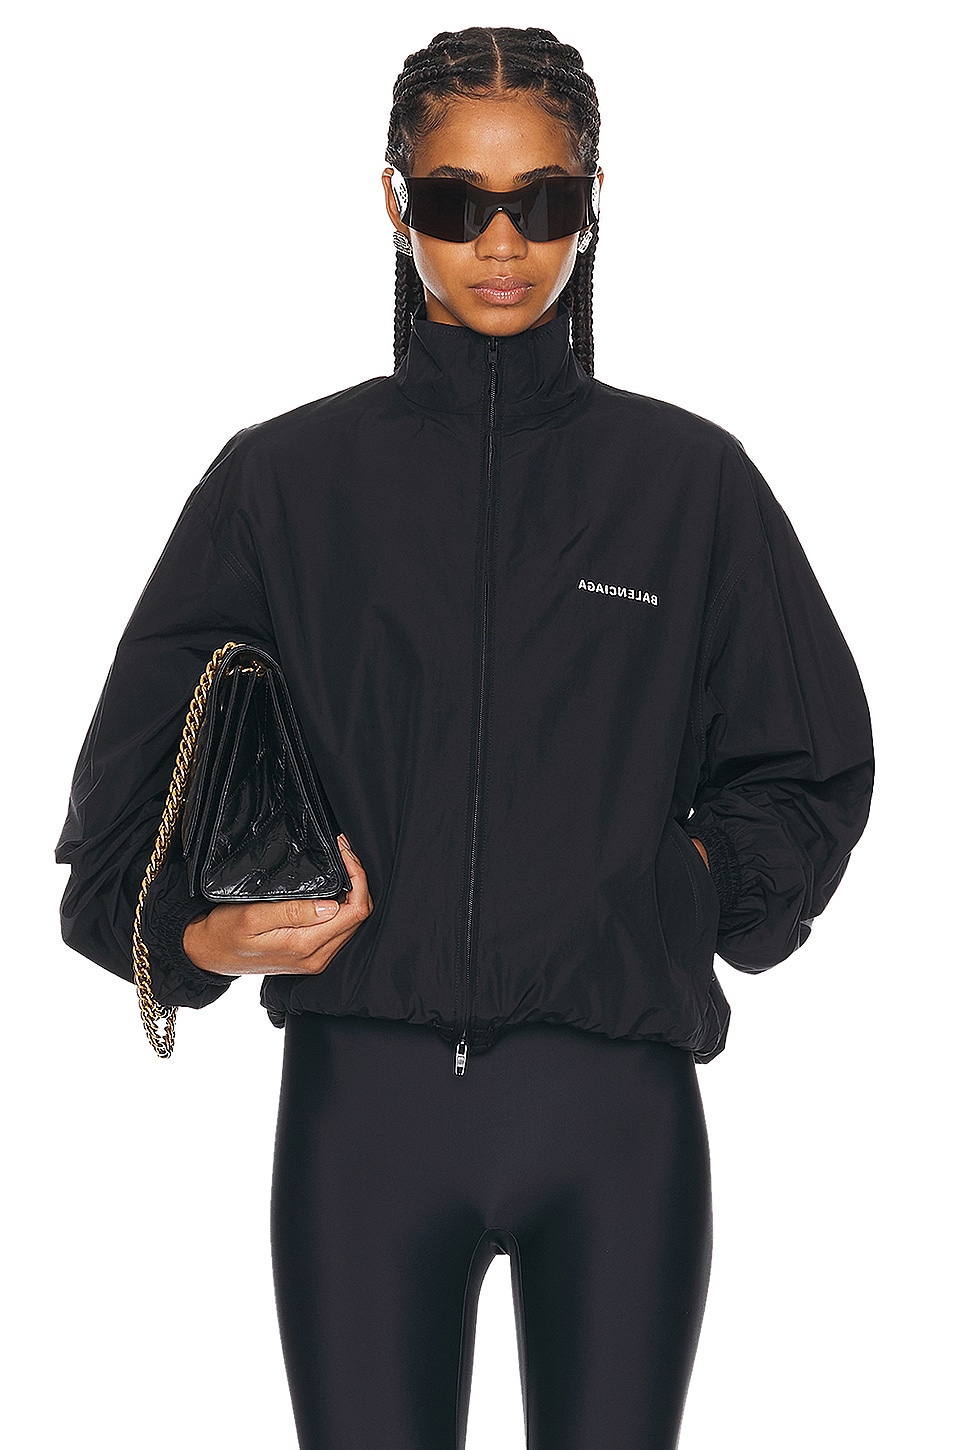 Image 1 of Balenciaga Tracksuit Jacket in Black